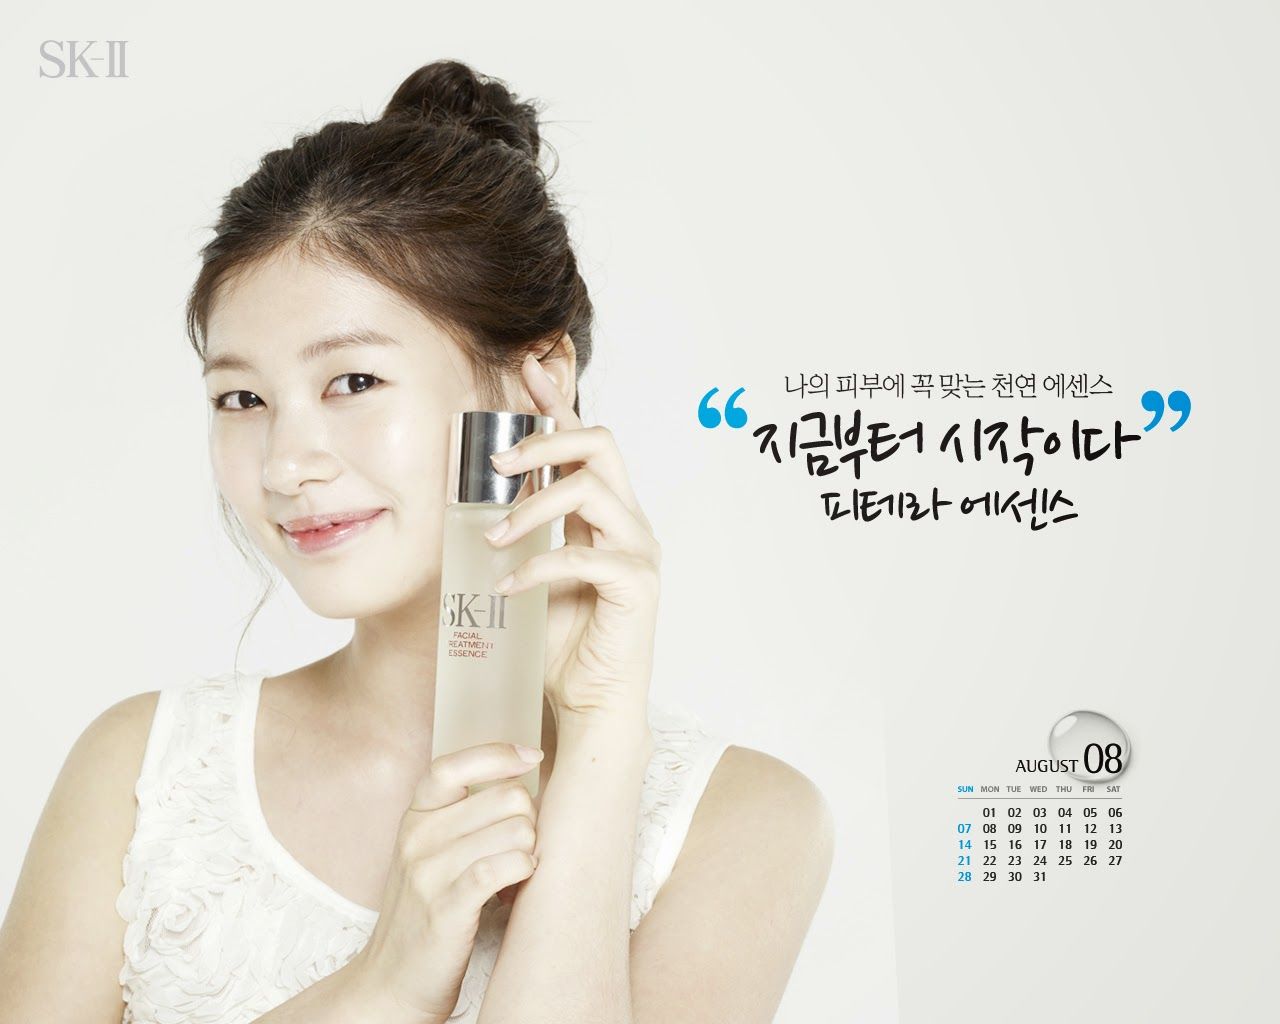 Everything 4u: Cute Korean Actress Jung So Min Wallpaper